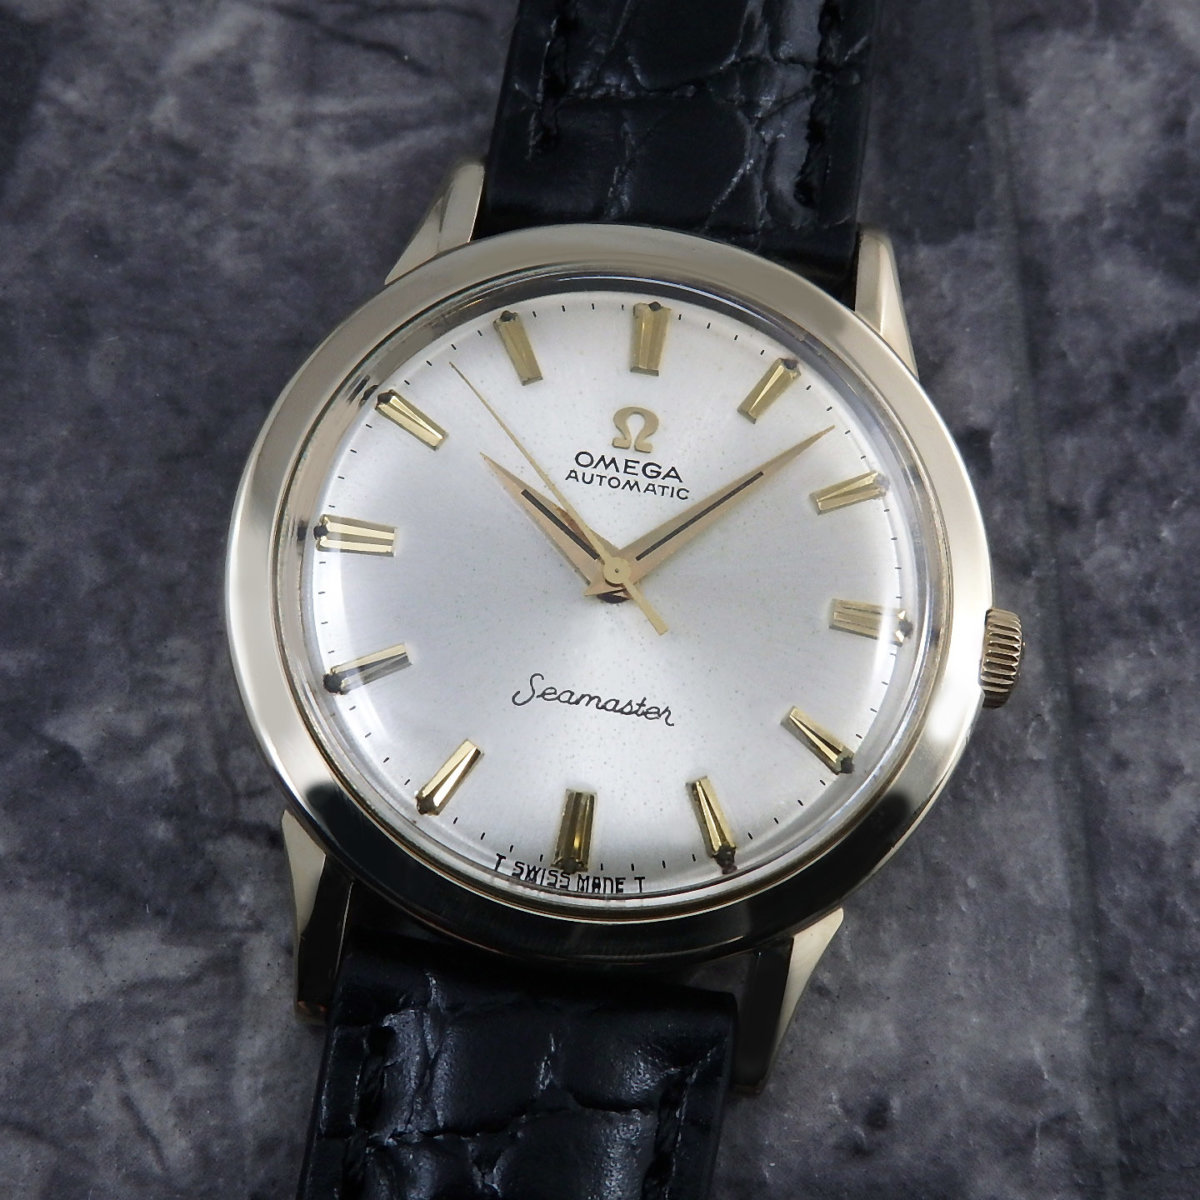 1960s オメガ シーマスター アンティーク 腕時計 希少タイプ 1966年 自動巻き 時計 OMEGA